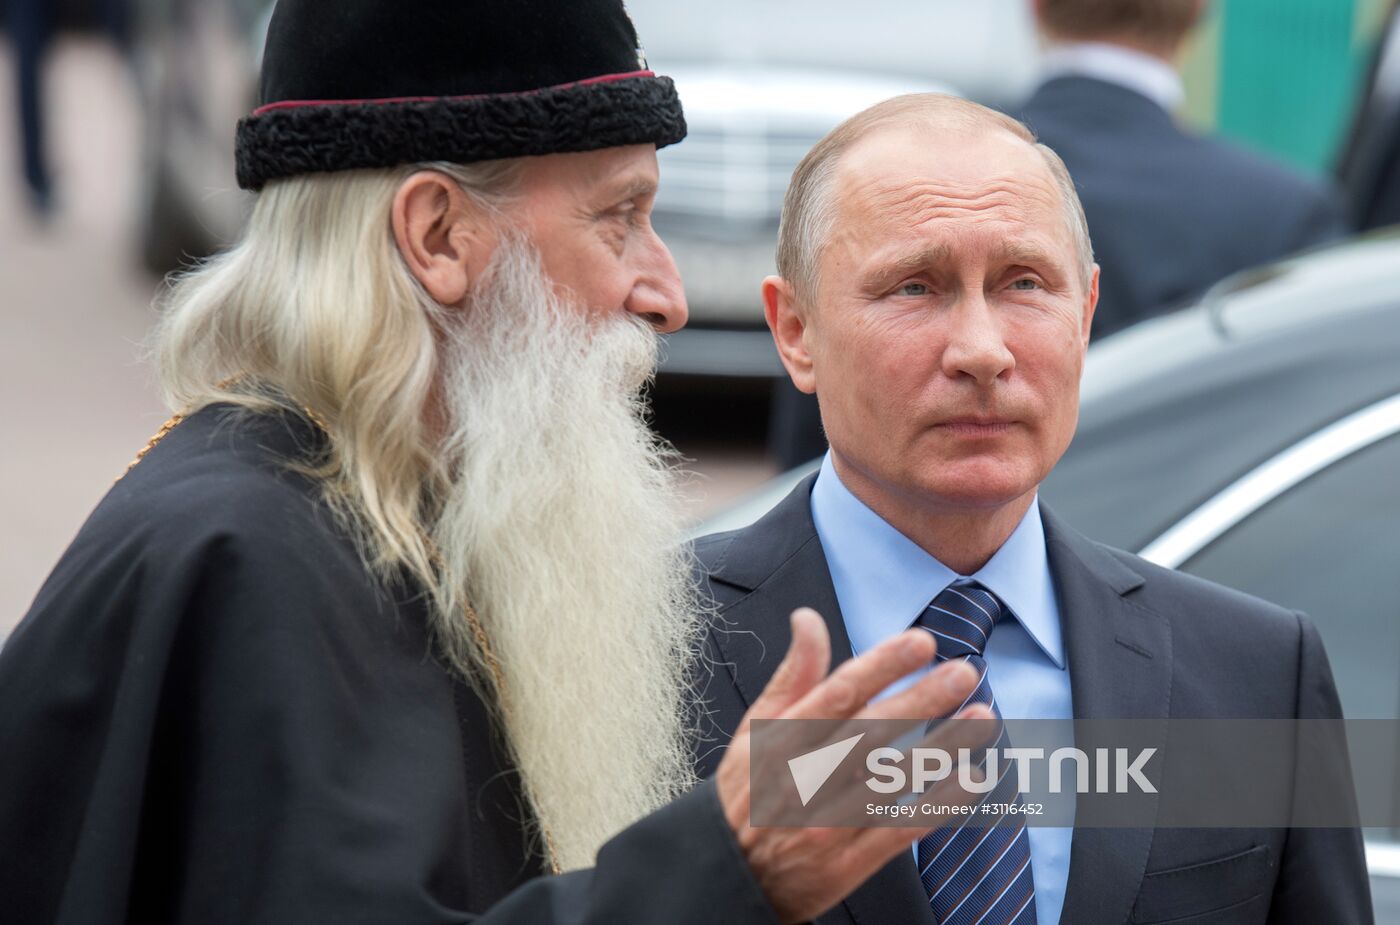 President Vladimir Putin visits Rogozhskaya Zastava Spiritual Center of Russian Orthodox Old-Rite Church in Moscow